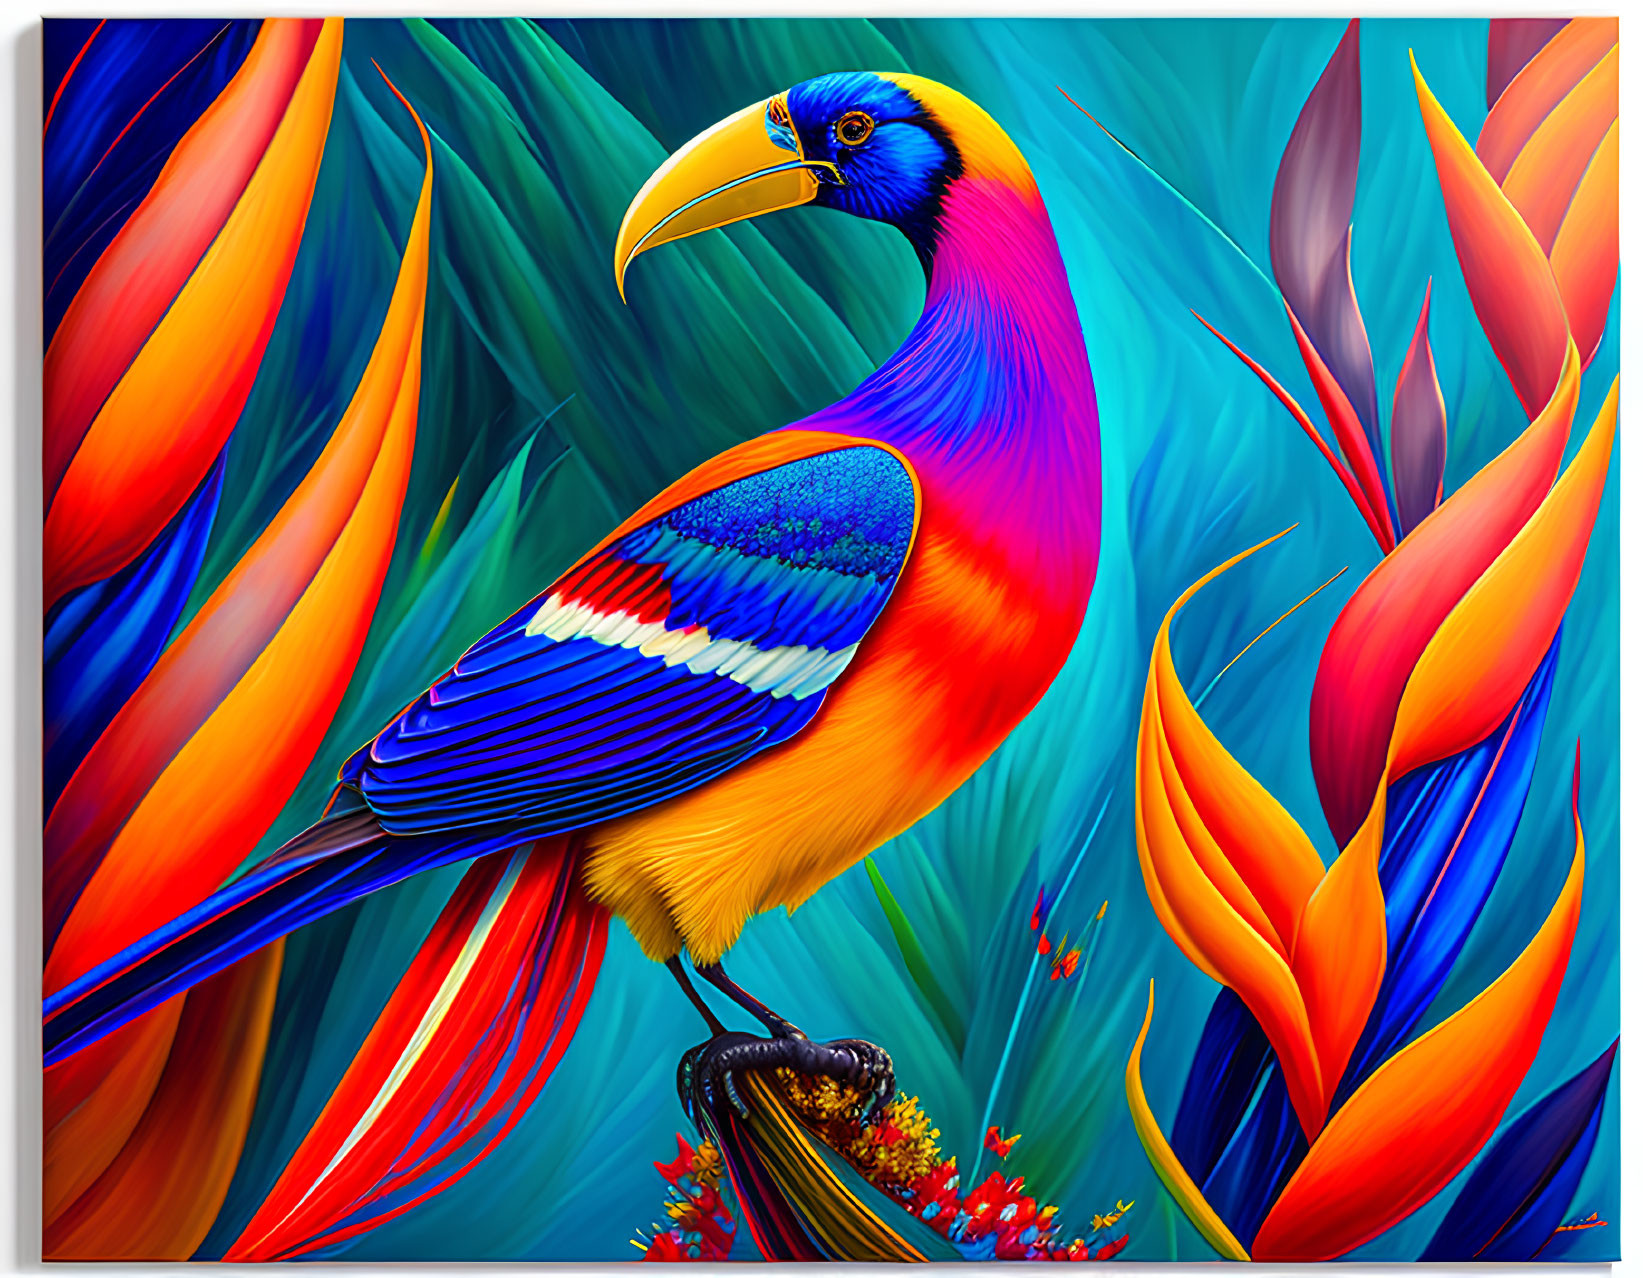 Colorful Bird Illustration with Large Beak and Tropical Foliage